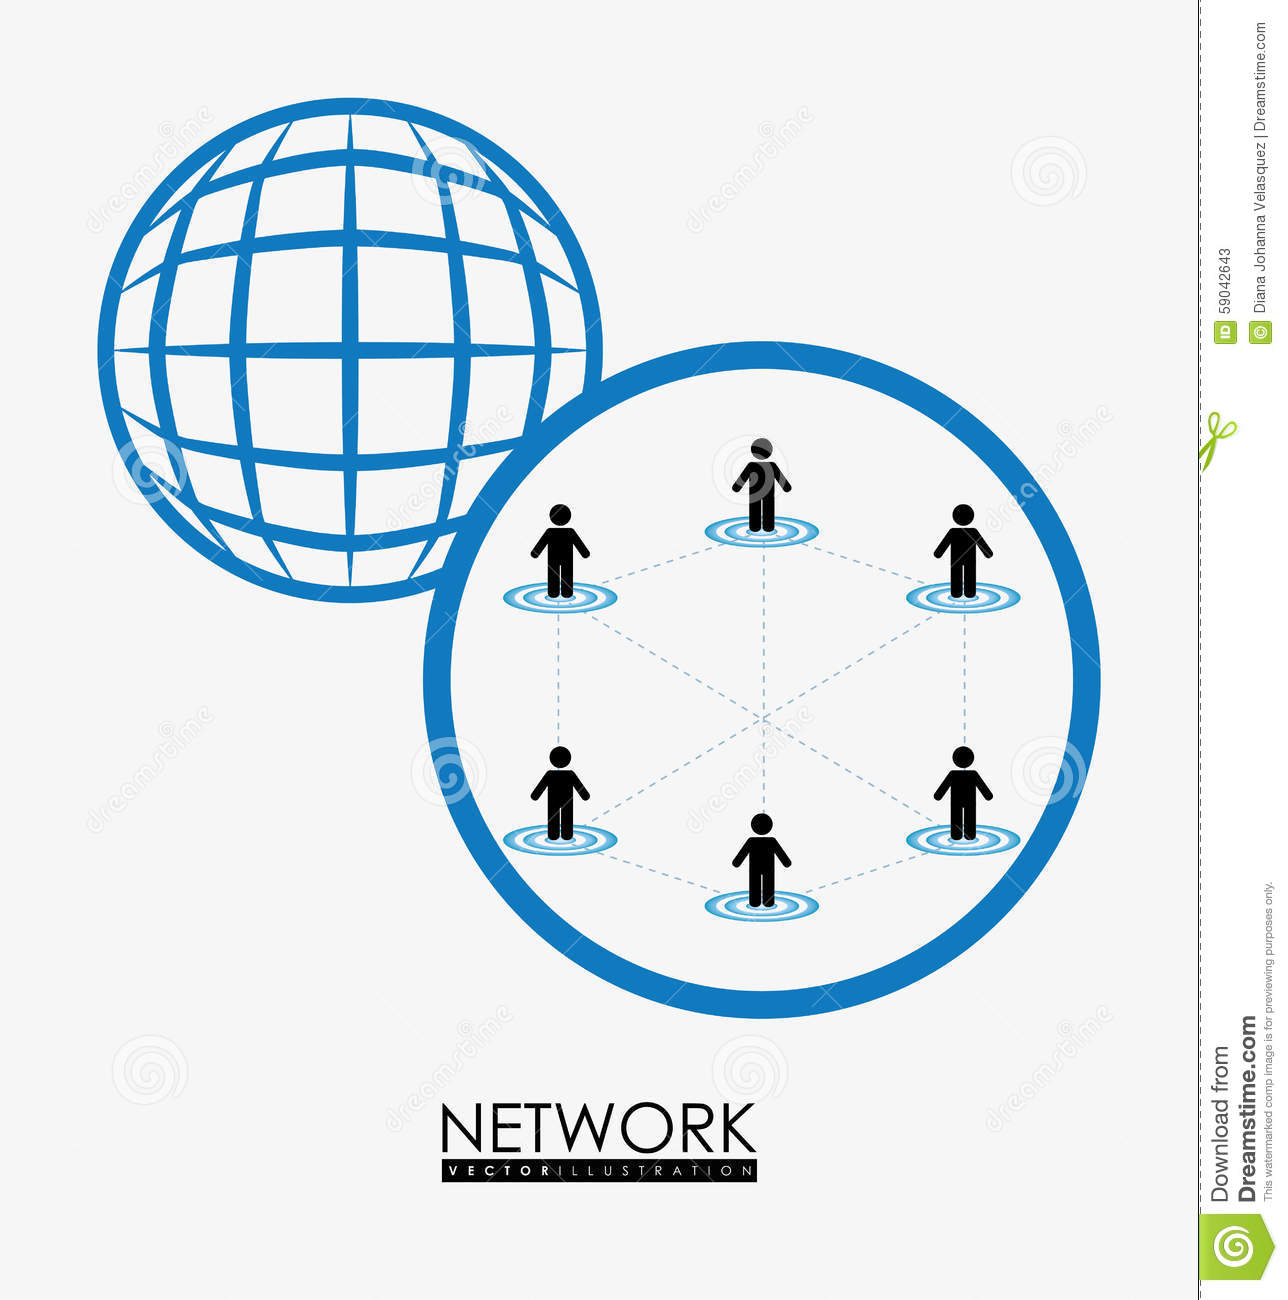 Network Vector Graphic